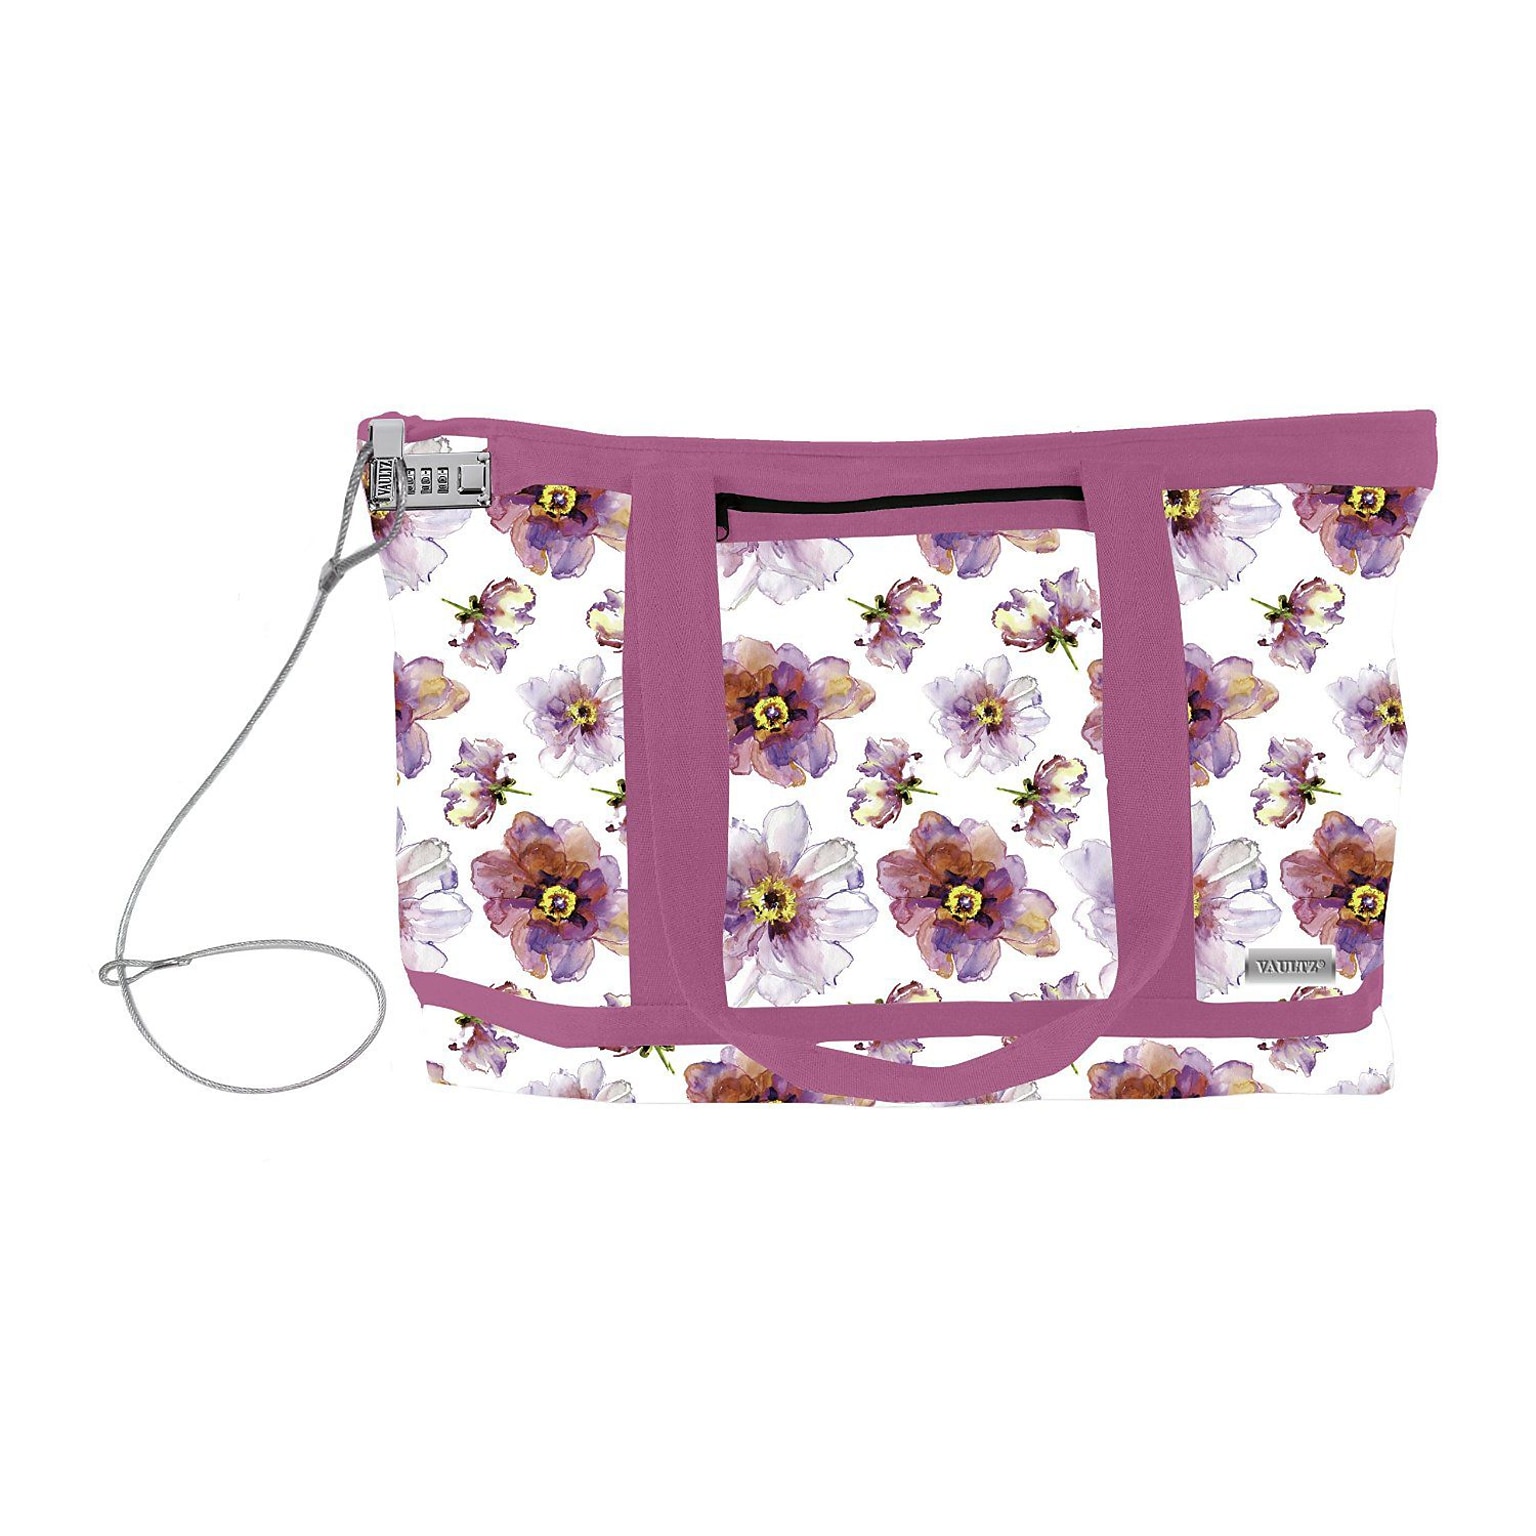 Vaultz® Locking Zipper Tote Bag, Pink/Purple Floral (VZ00679)